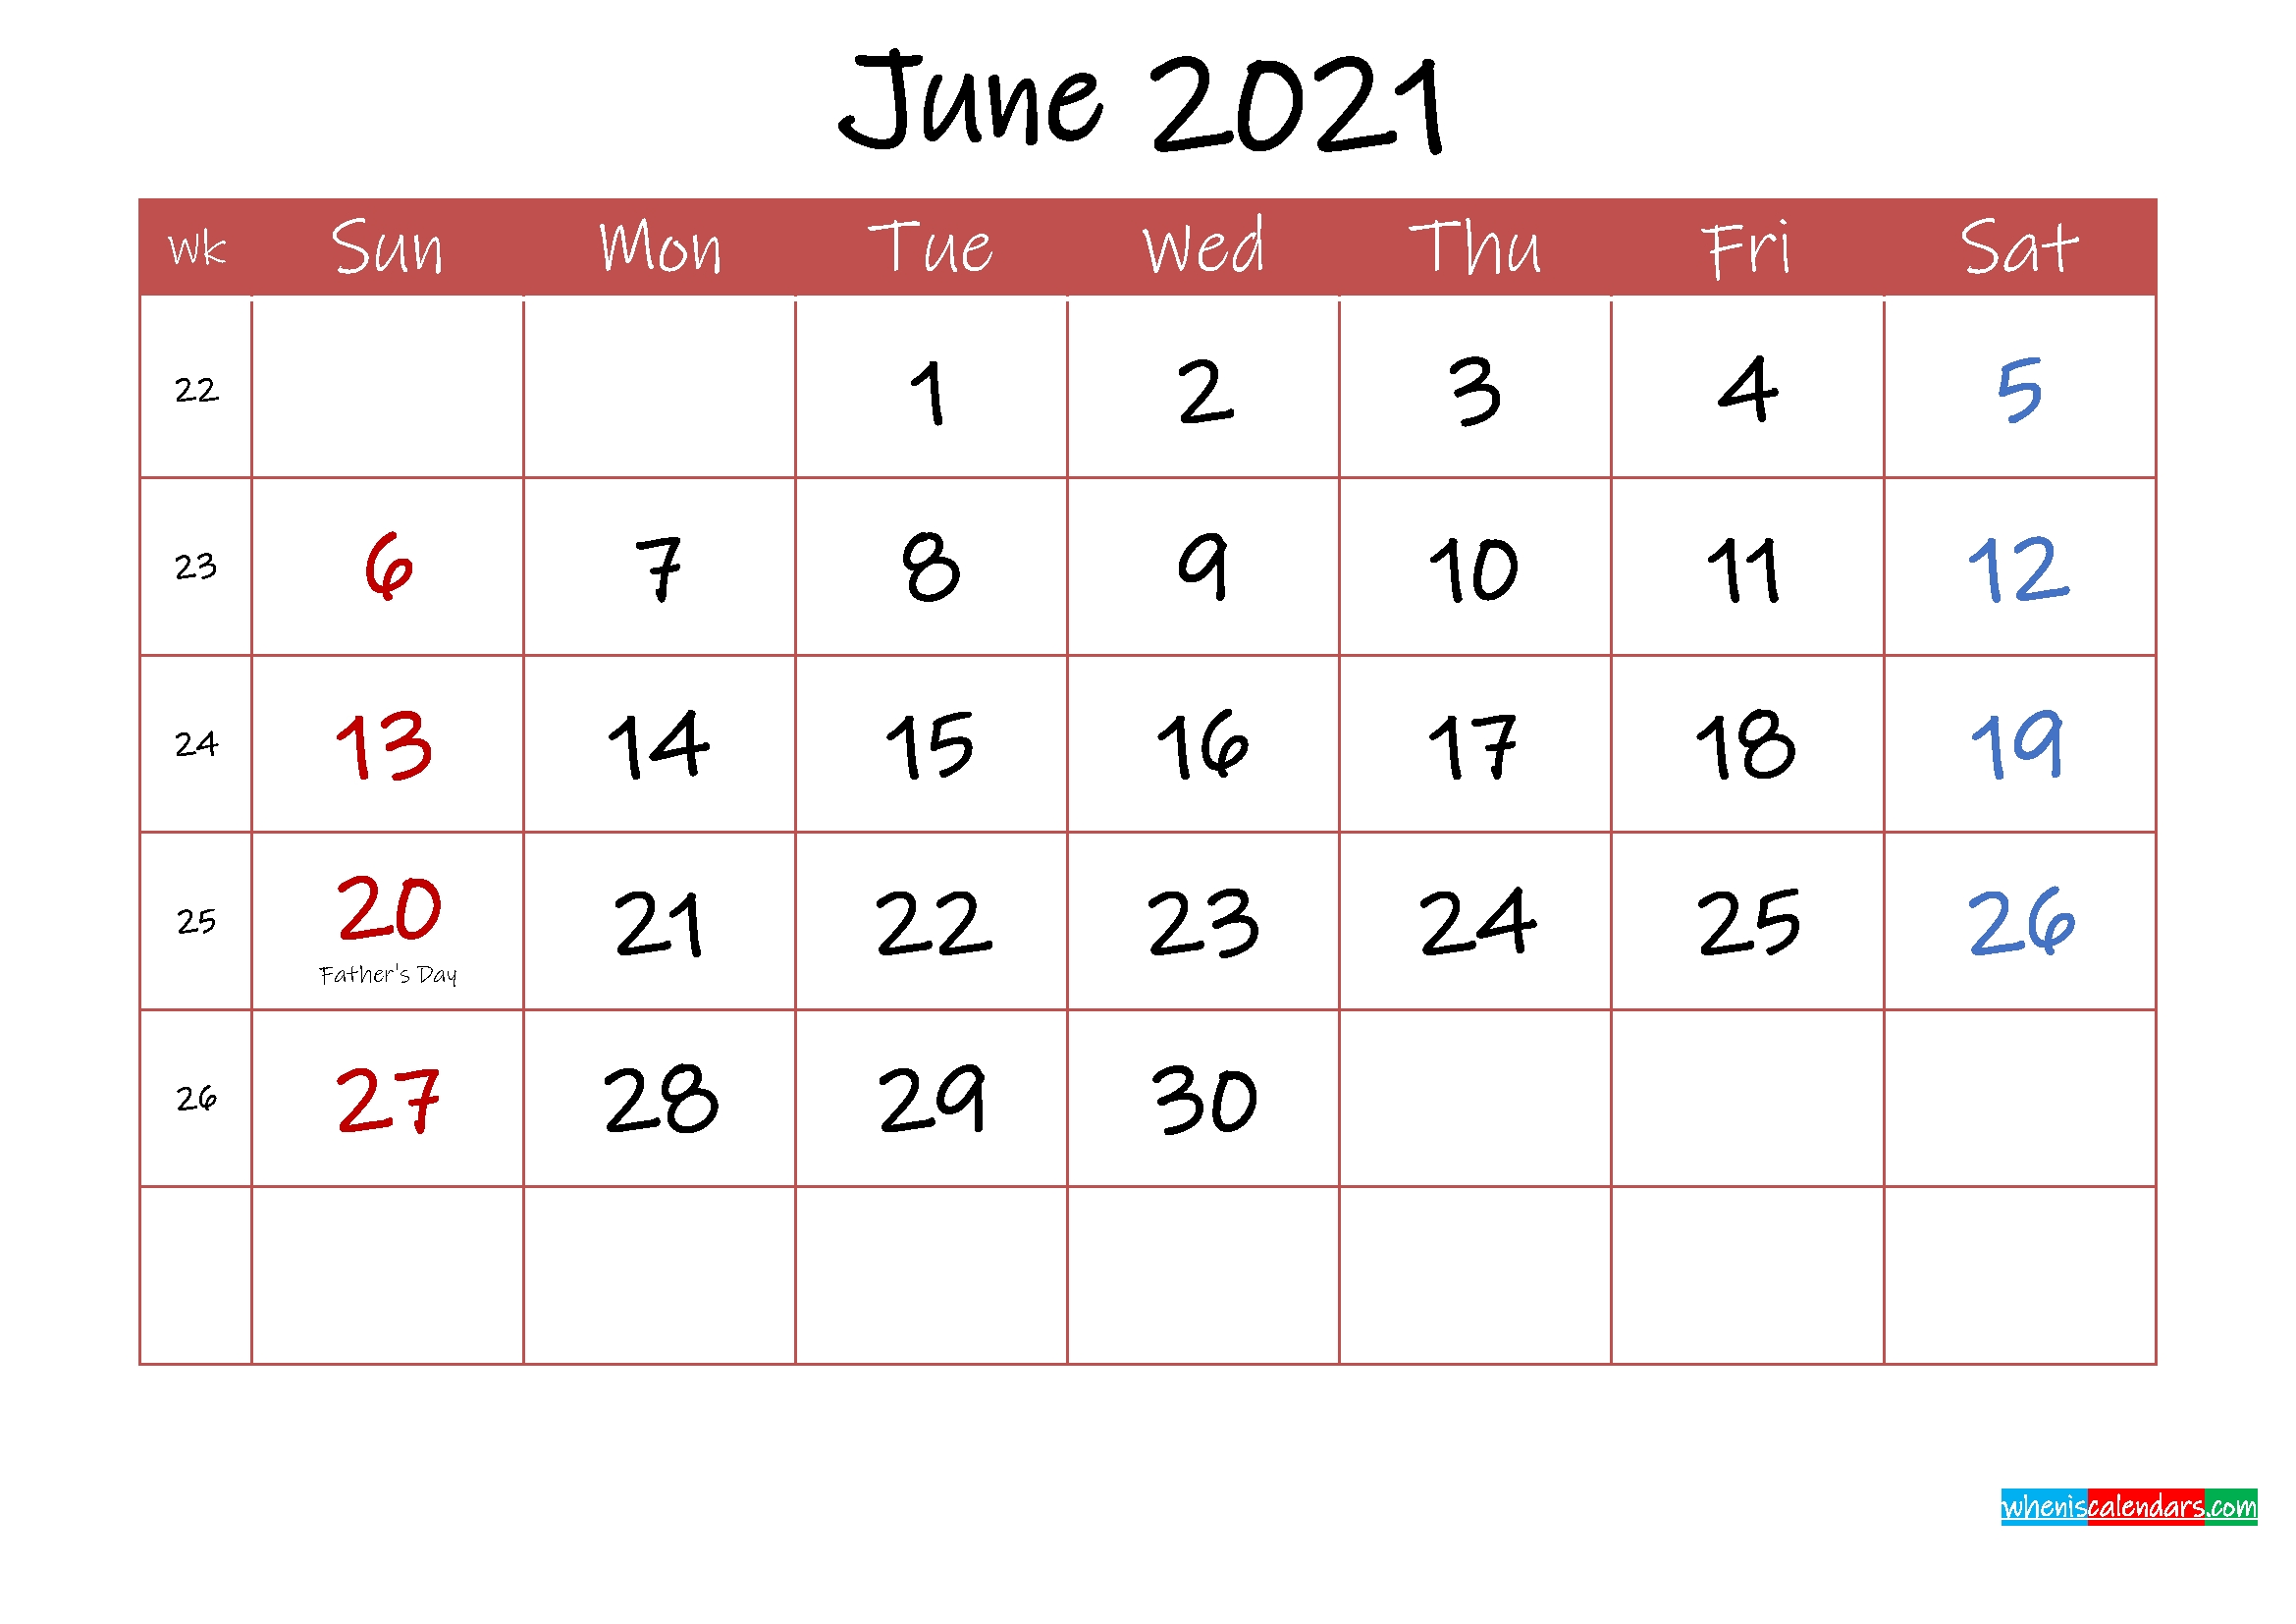 Printable June 2021 Calendar With Holidays - Template Ink21M30 June 2021 Calendar Kuda